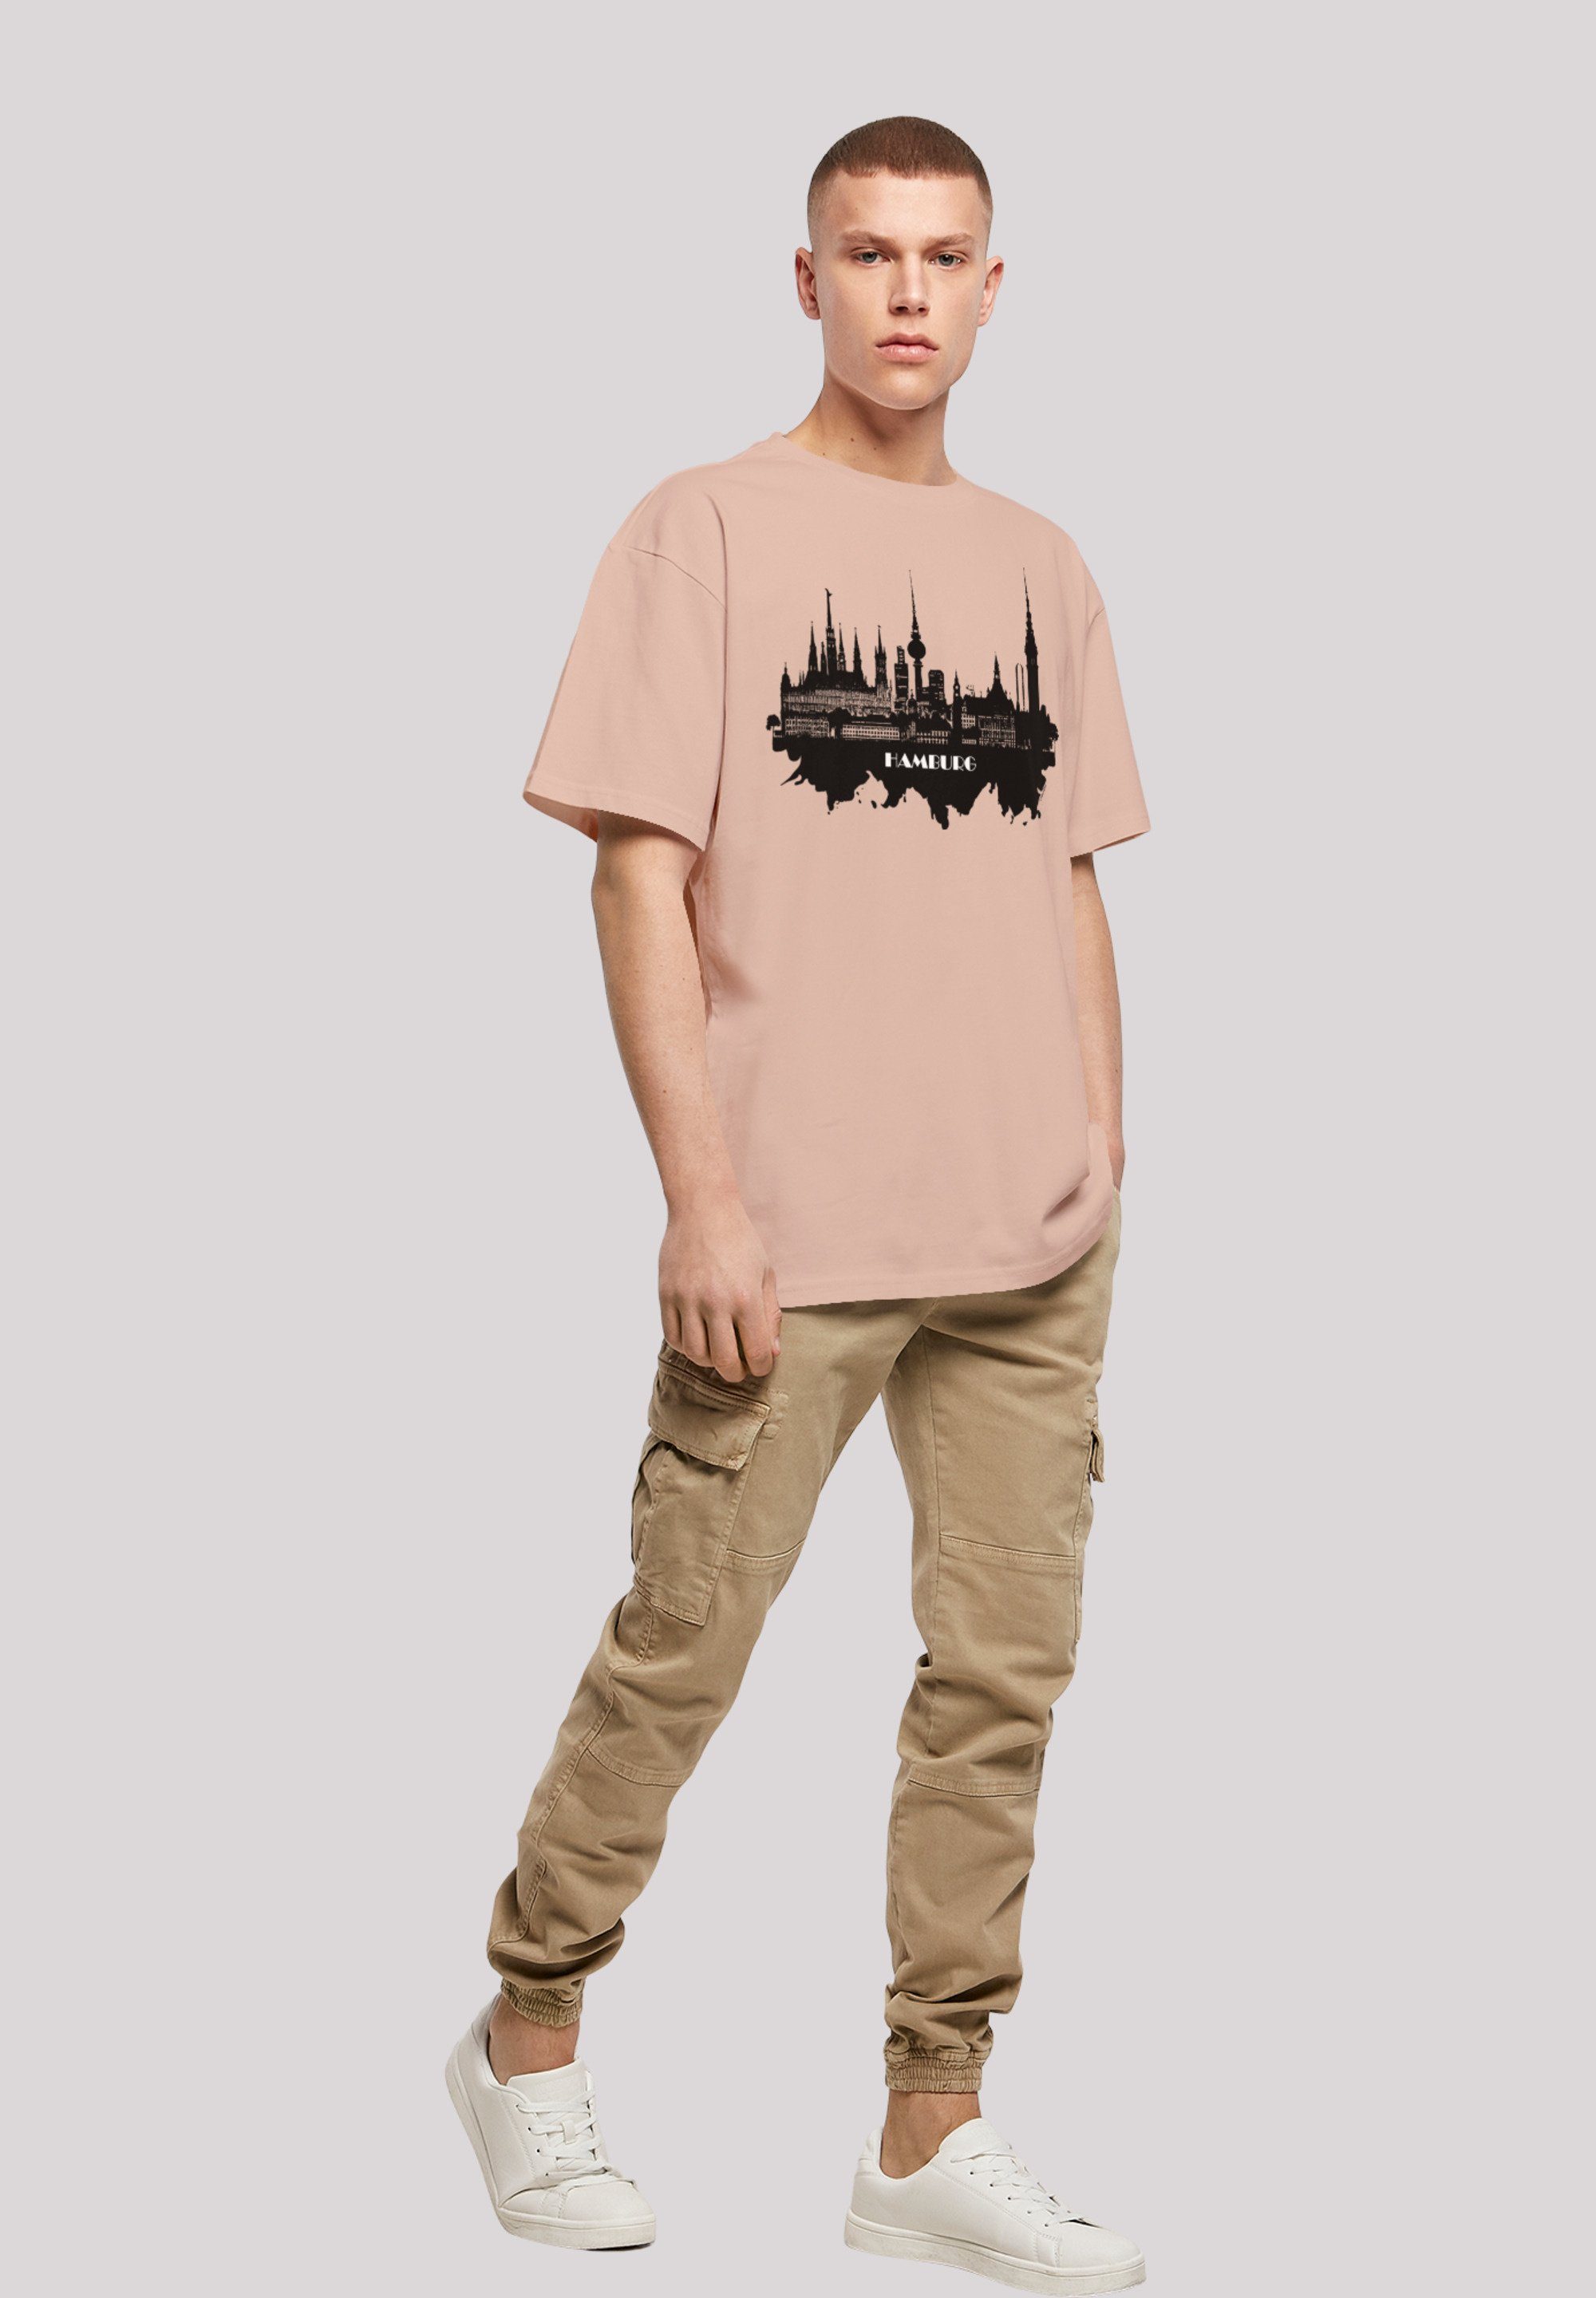 Cities skyline F4NT4STIC Hamburg Print amber - T-Shirt Collection